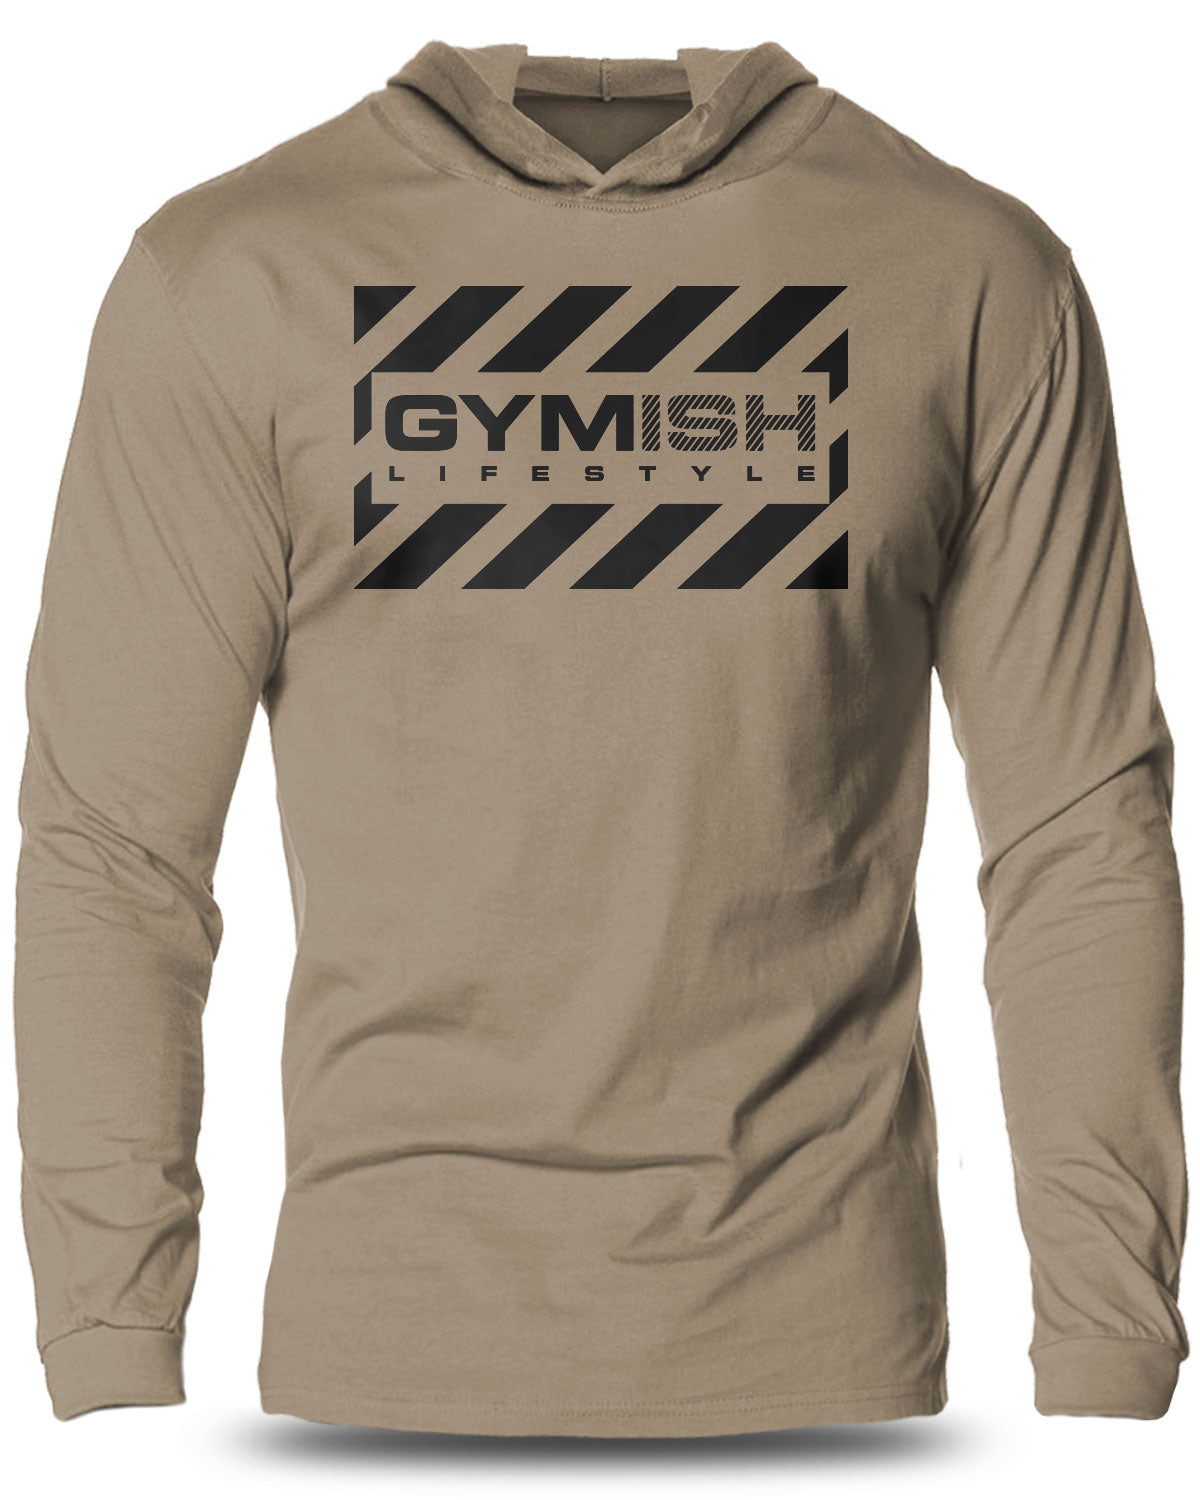 076-Gymish Supreme Lightweight Long Sleeve Hooded T-shirt for Men